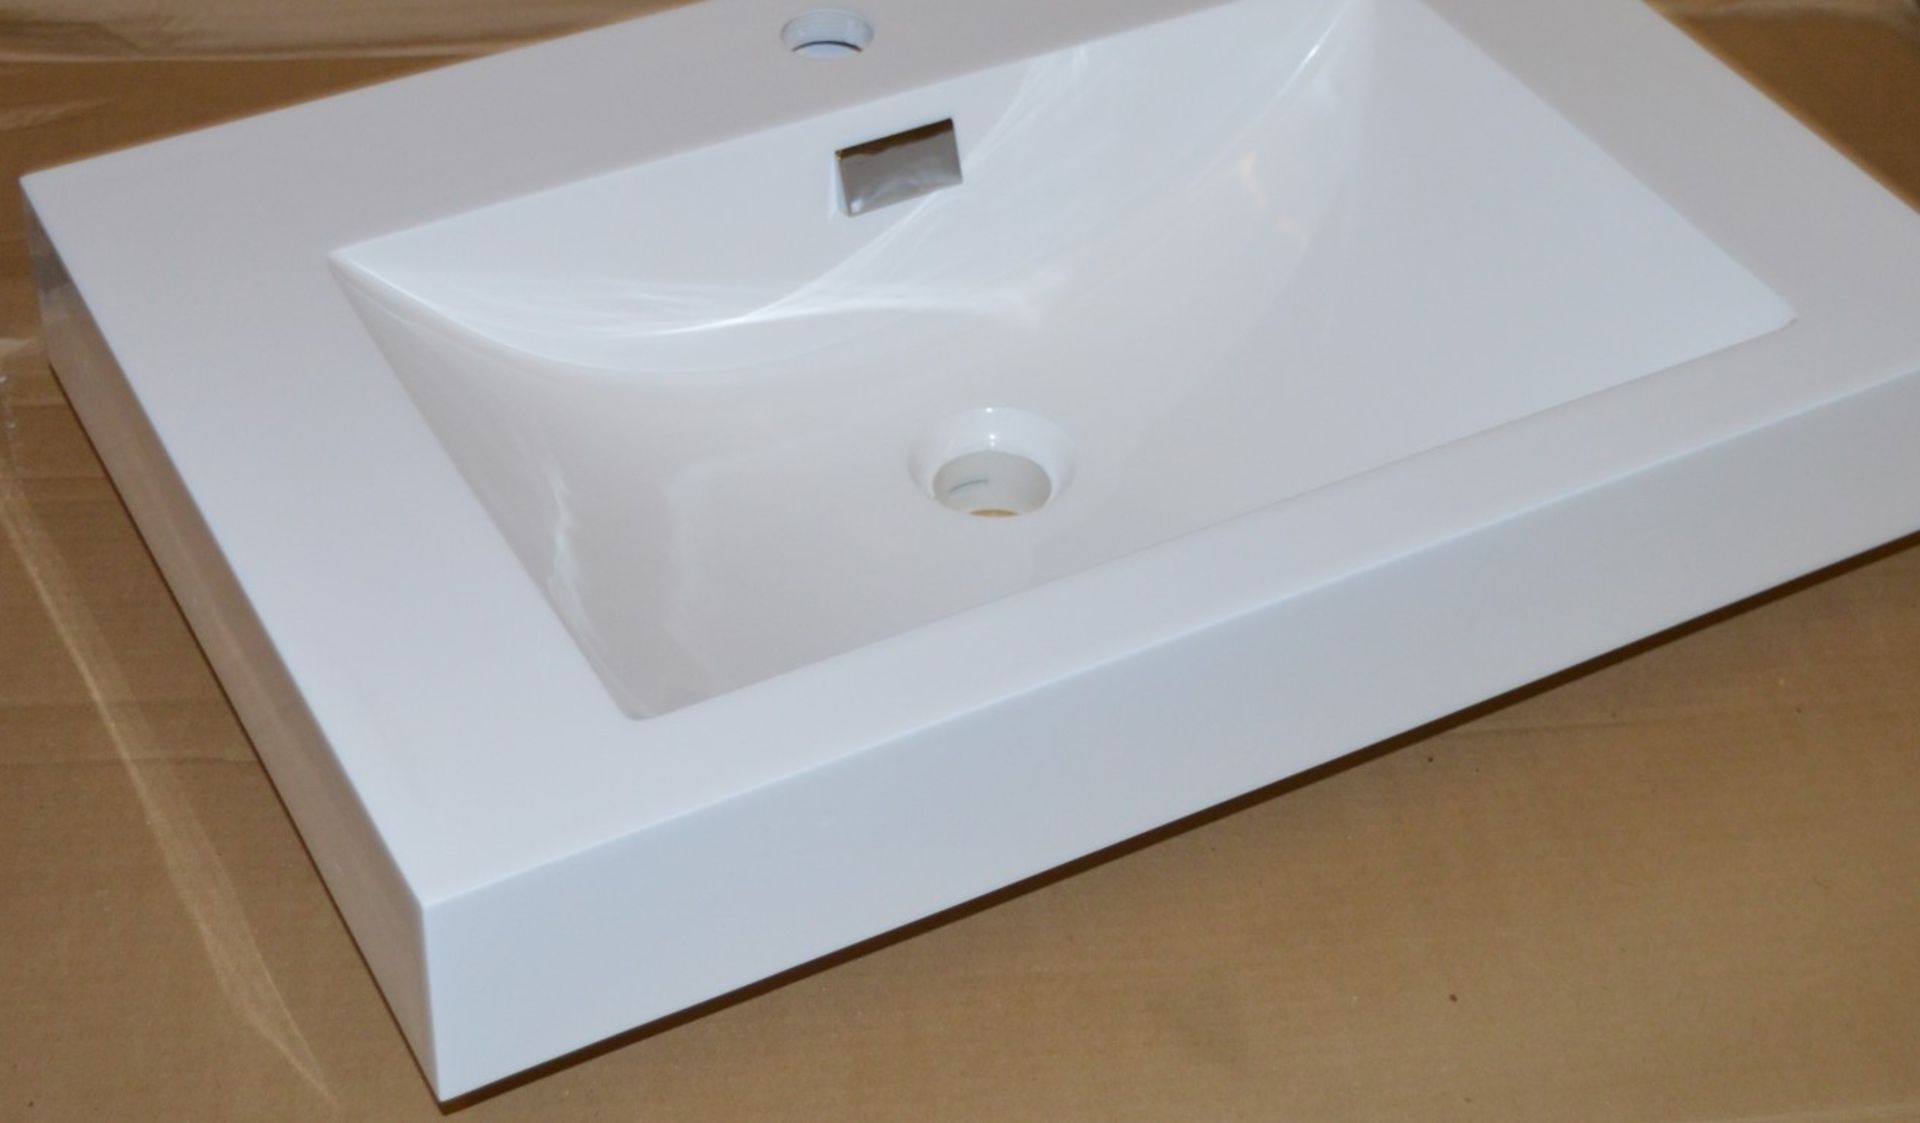 10 x Vogue Bathrooms JUNO Single Tap Hole Inset Sink Basins - 600mm Width - Product Code 1VFJU60 - - Image 3 of 7